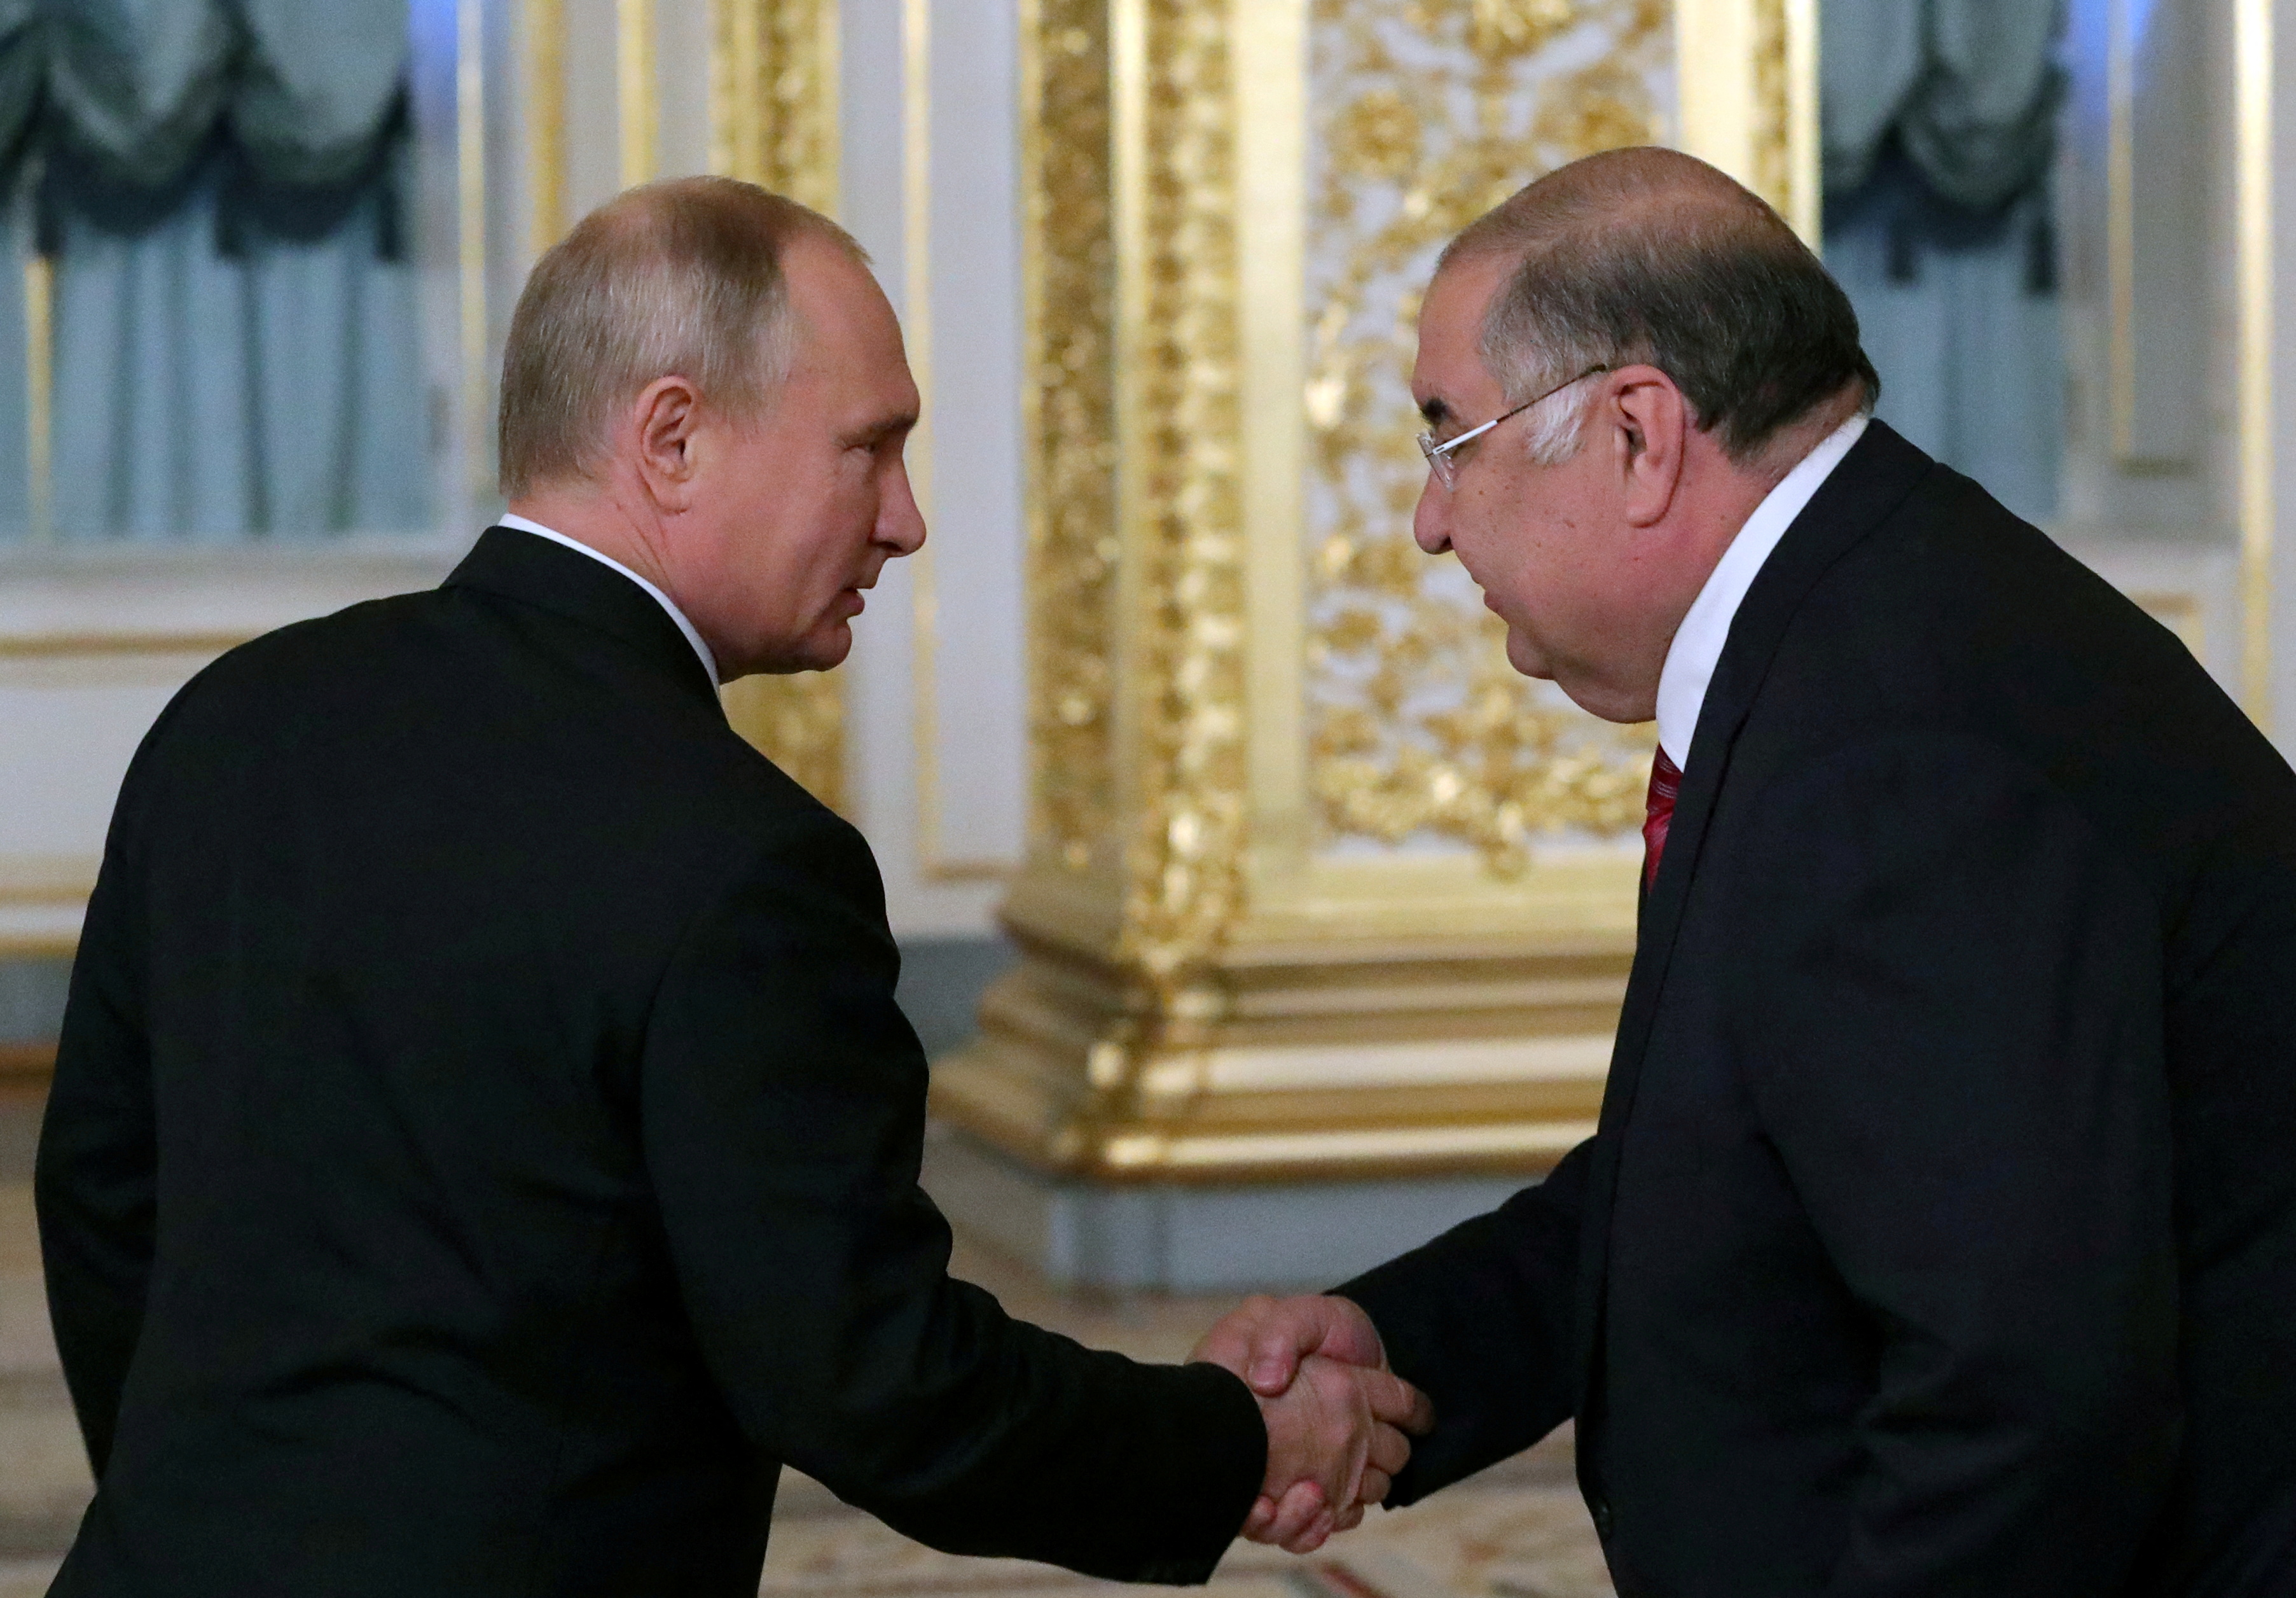 Alisher Usmanov shaking hands with Russian president Vladimir Putin.